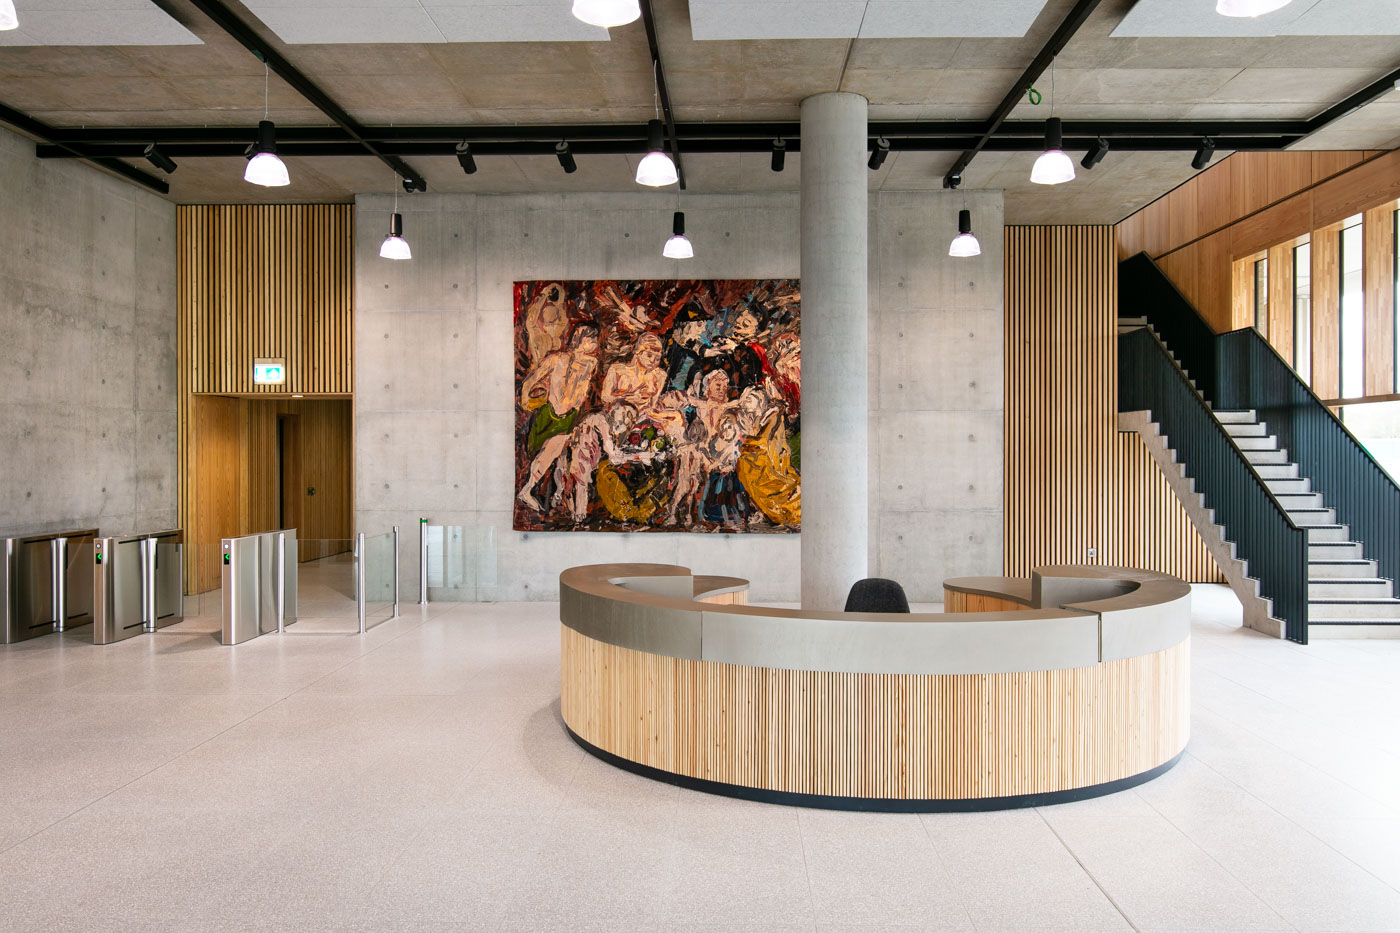 Parabola completes 'landmark' Edinburgh office building